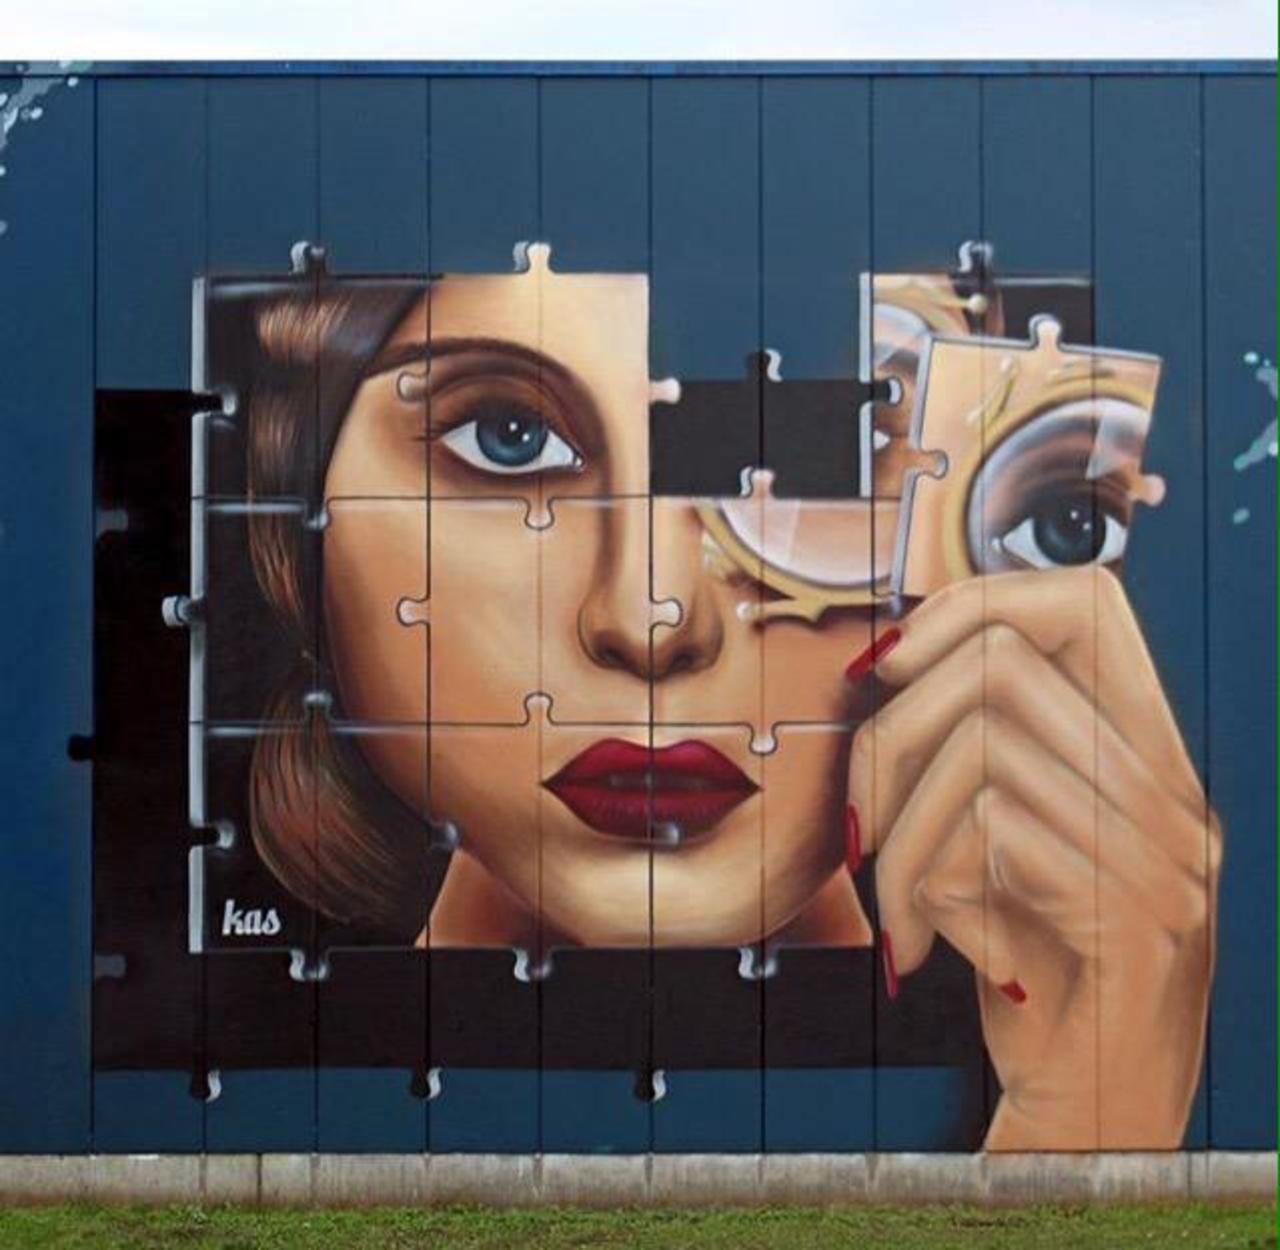 Kas Art's new Street Art "Piece of me" in Aalst Belgium 

#art #graffiti #mural #streetart http://t.co/0fkSjalu0B